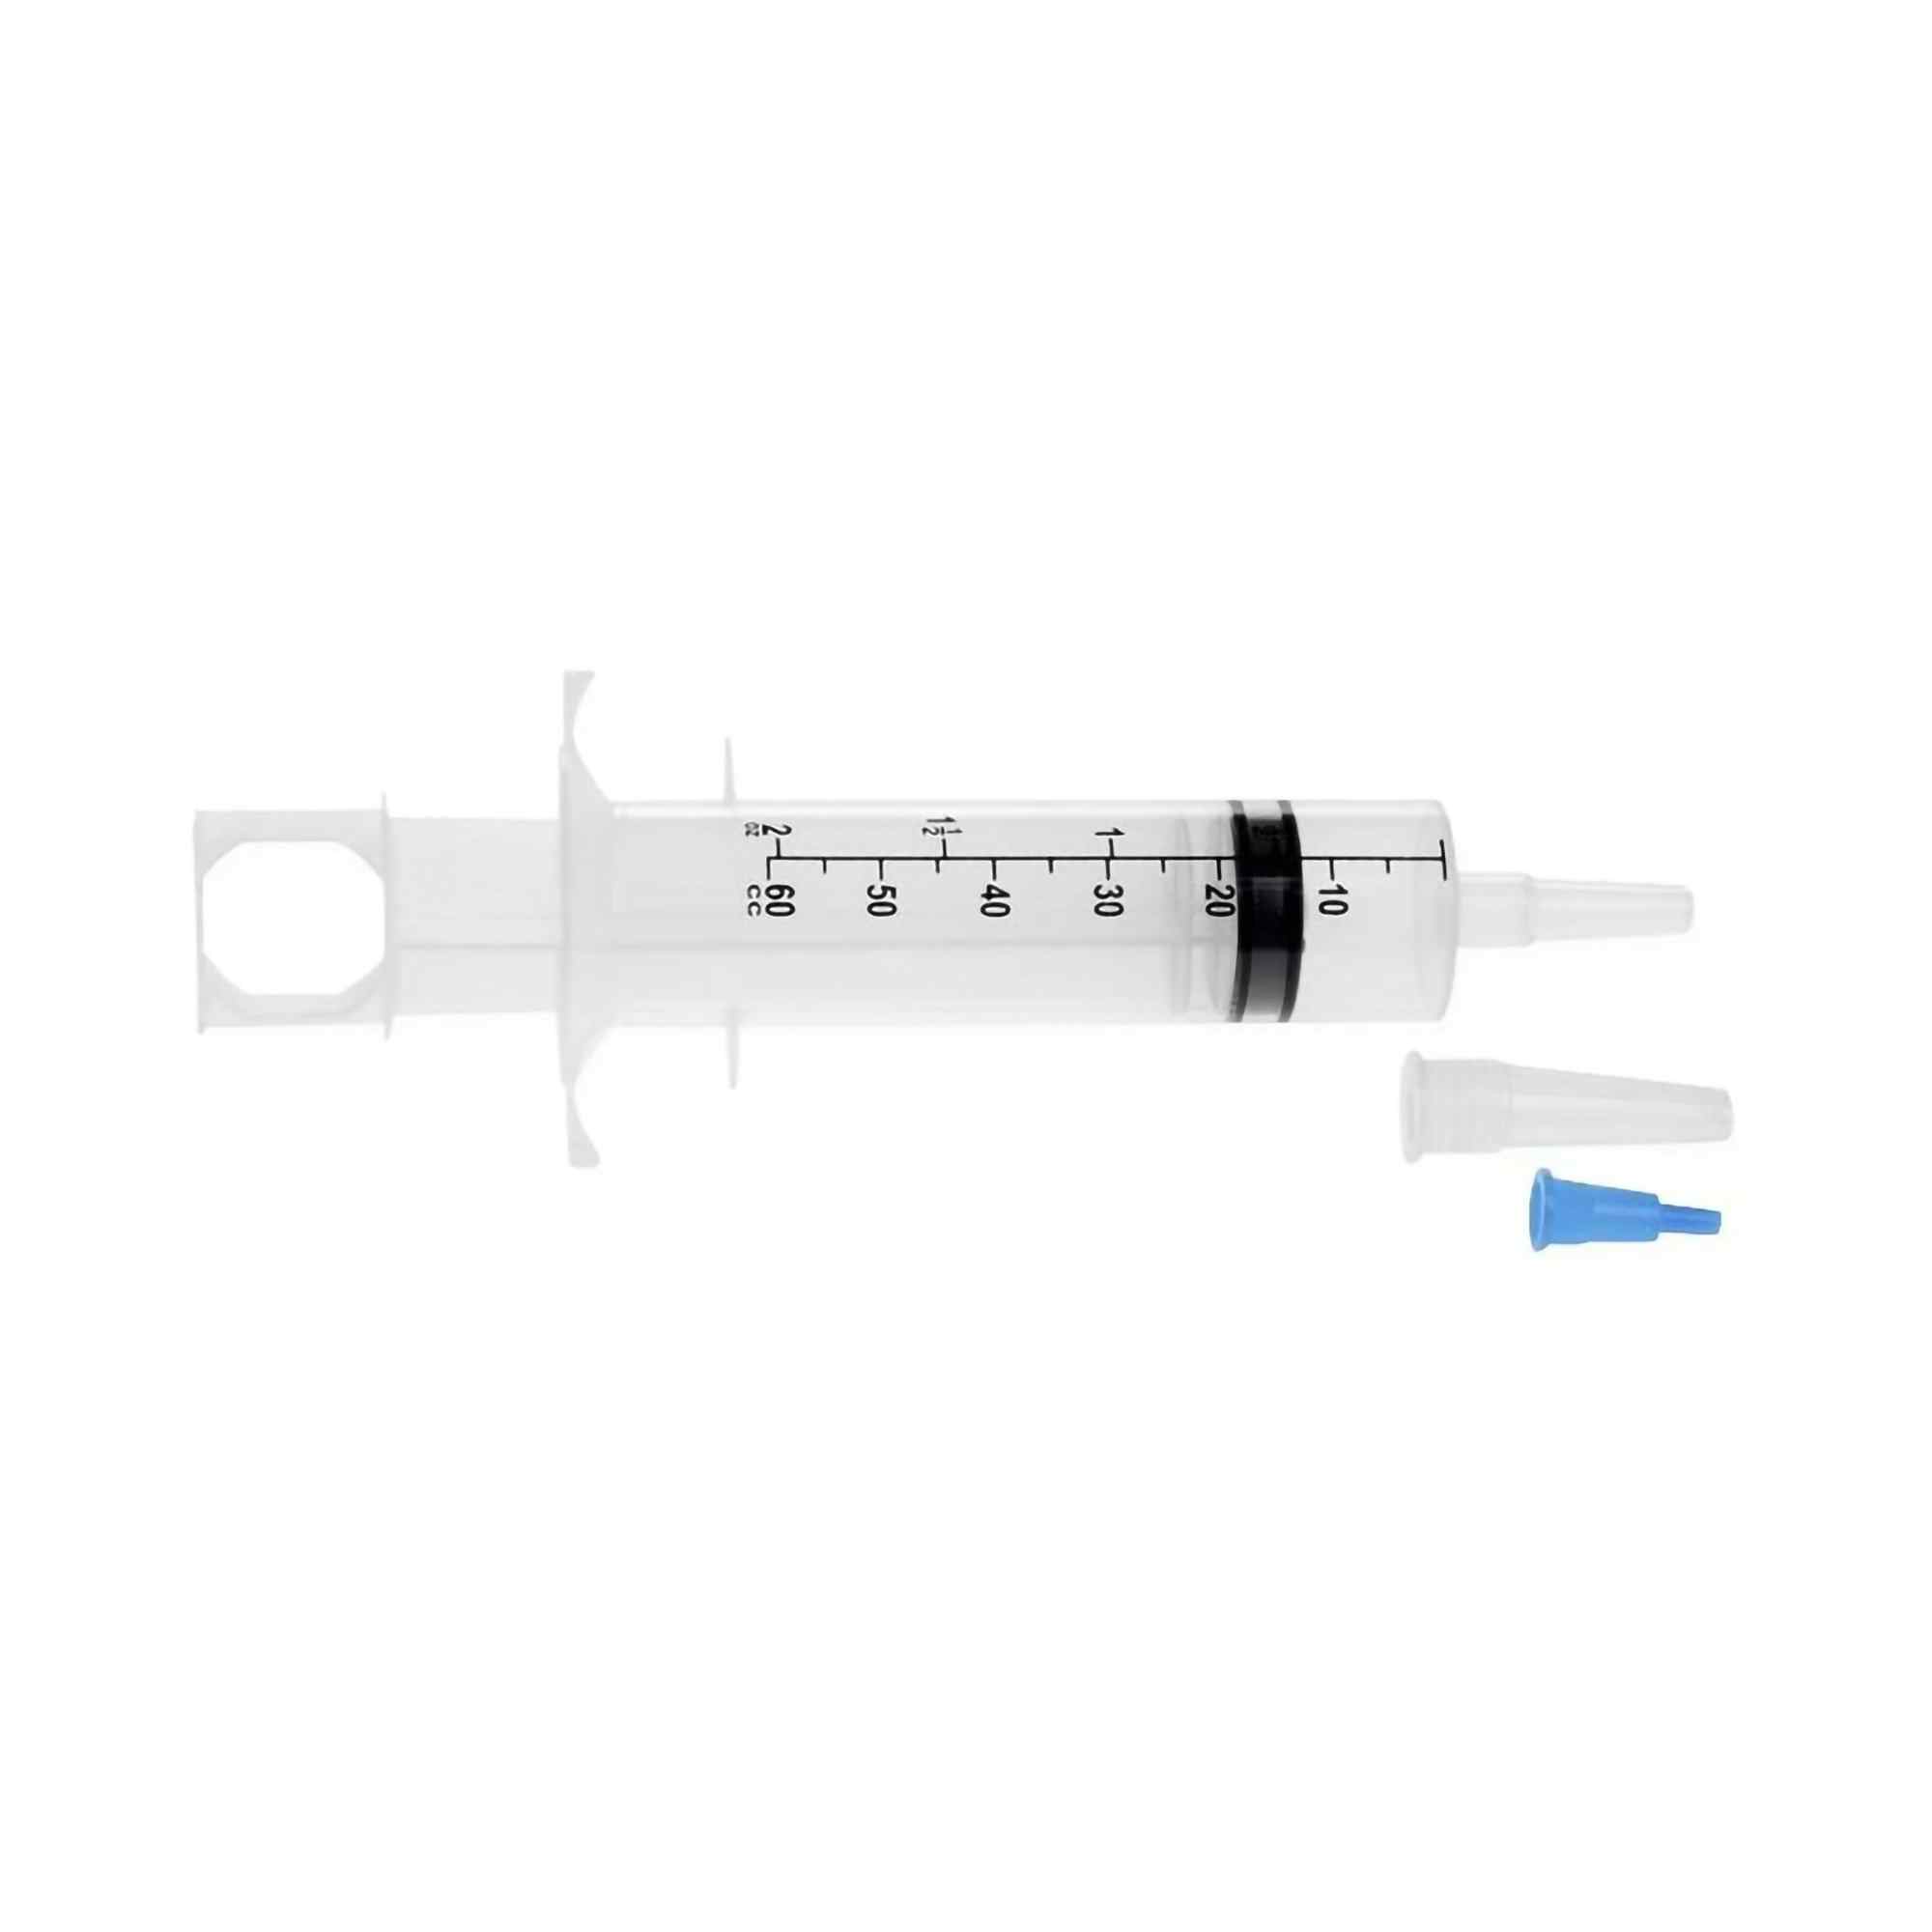 Medline Flat Top with Ring Feeding Syringe, Catheter Tip, 60 mL IV Pole Bag, DYND70642, Case of 30